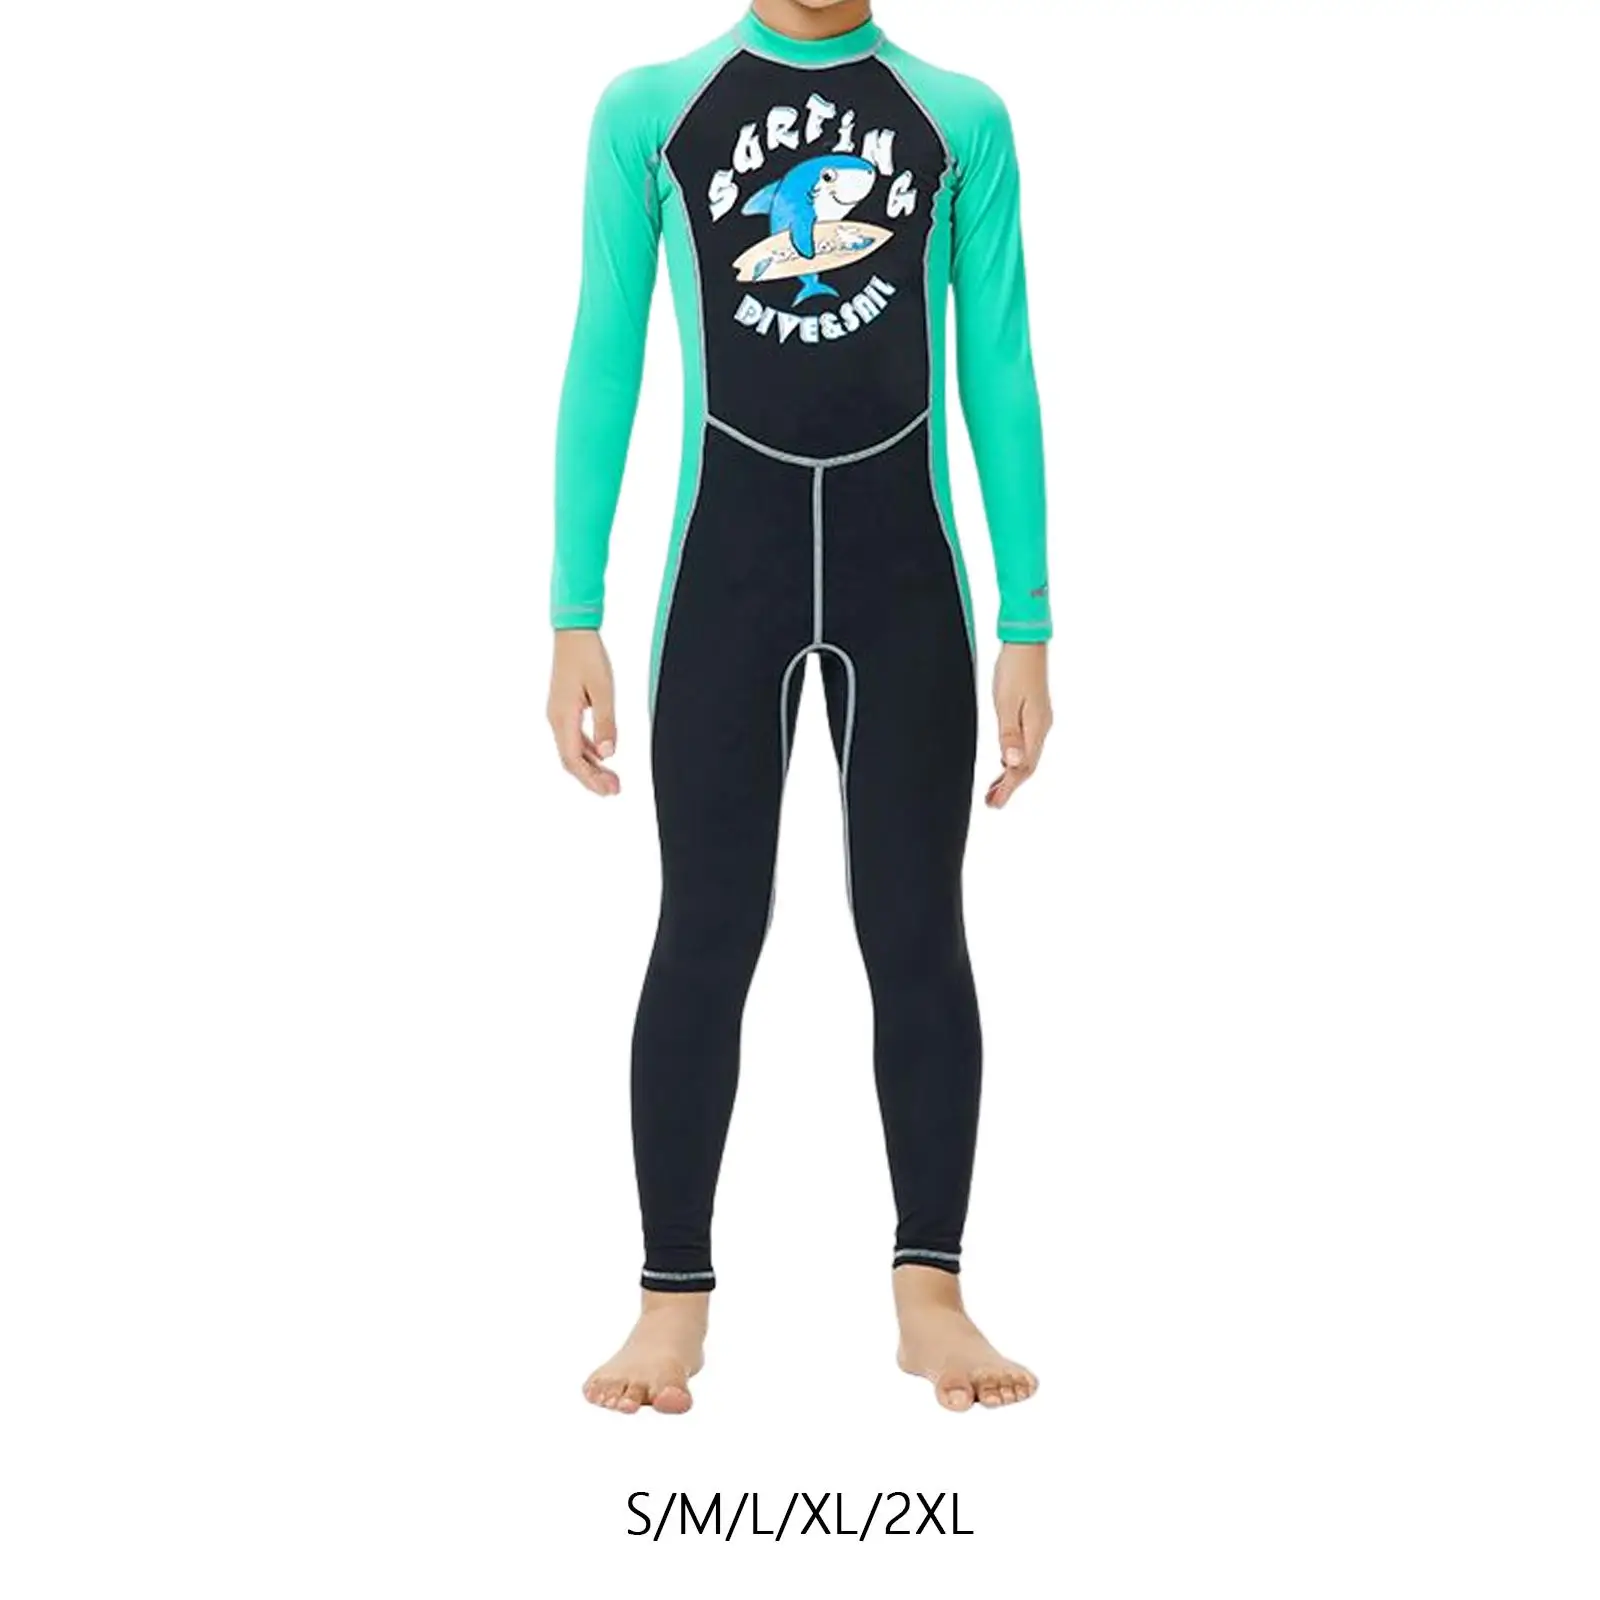 Kids Wetsuit Swimsuit Long Sleeve Full Body Scuba Diving Suit for Surfing Girls Boys